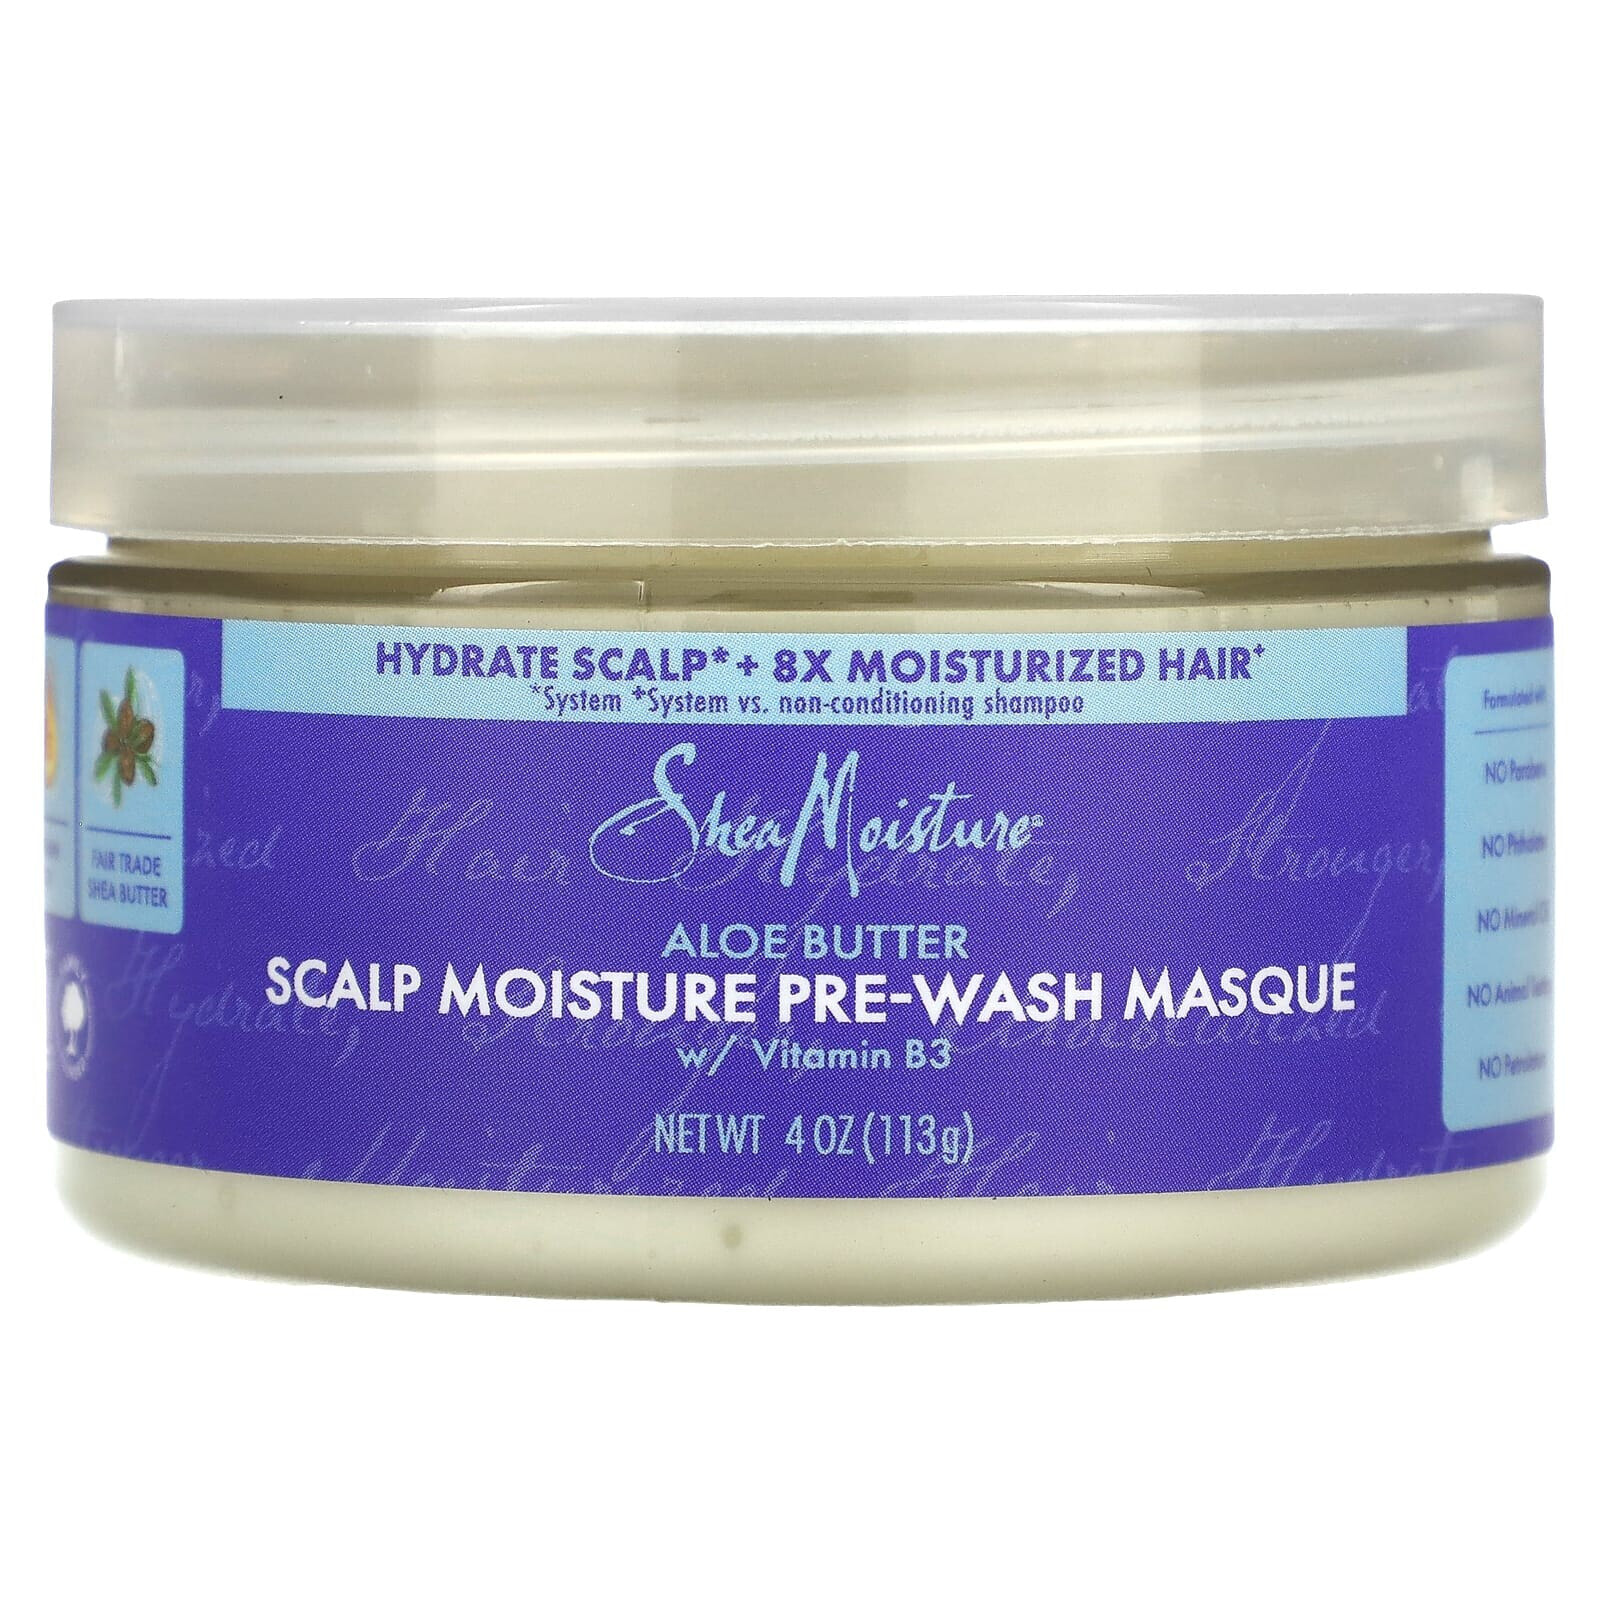 SheaMoisture, Scalp Moisture Pre-Wash Masque, Aloe Butter, 4 oz (113 g)